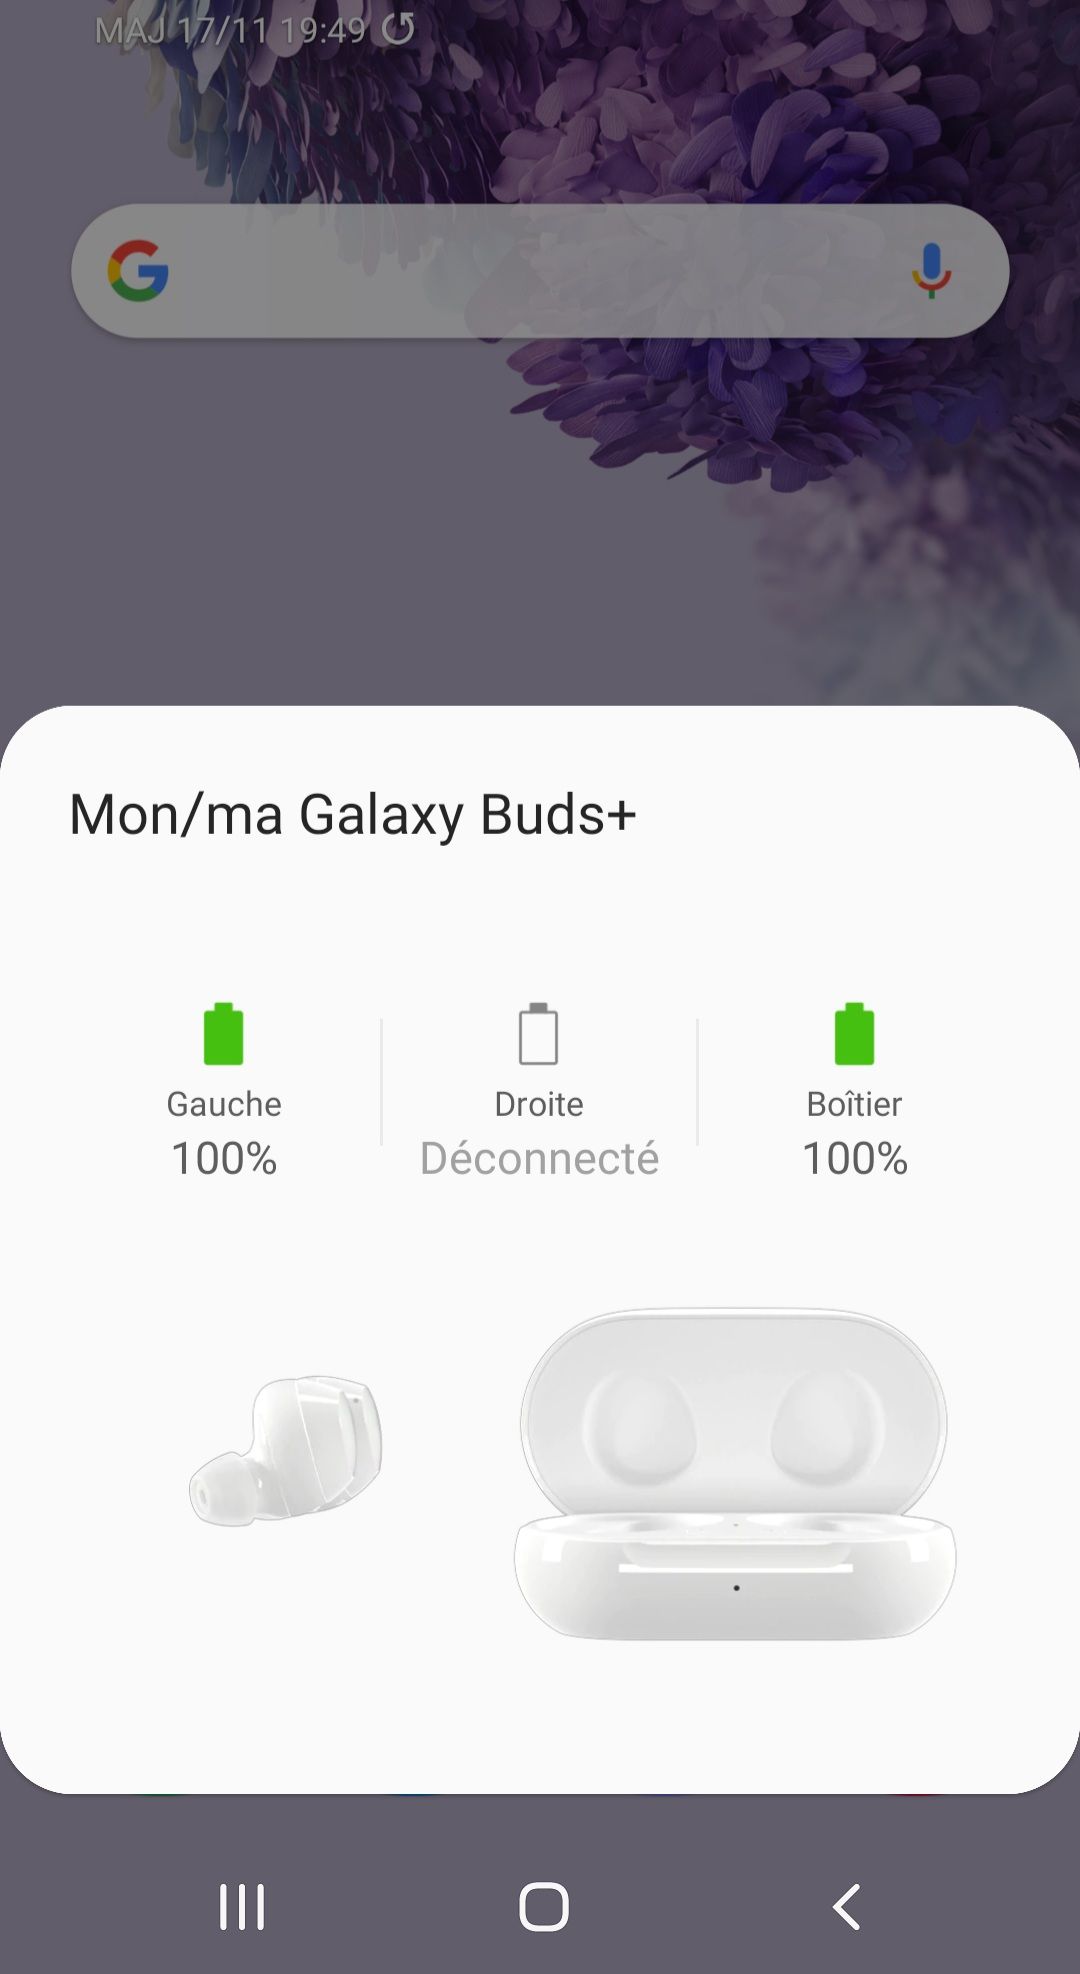 Un de mes galaxy buds ne marche pas - Samsung Community